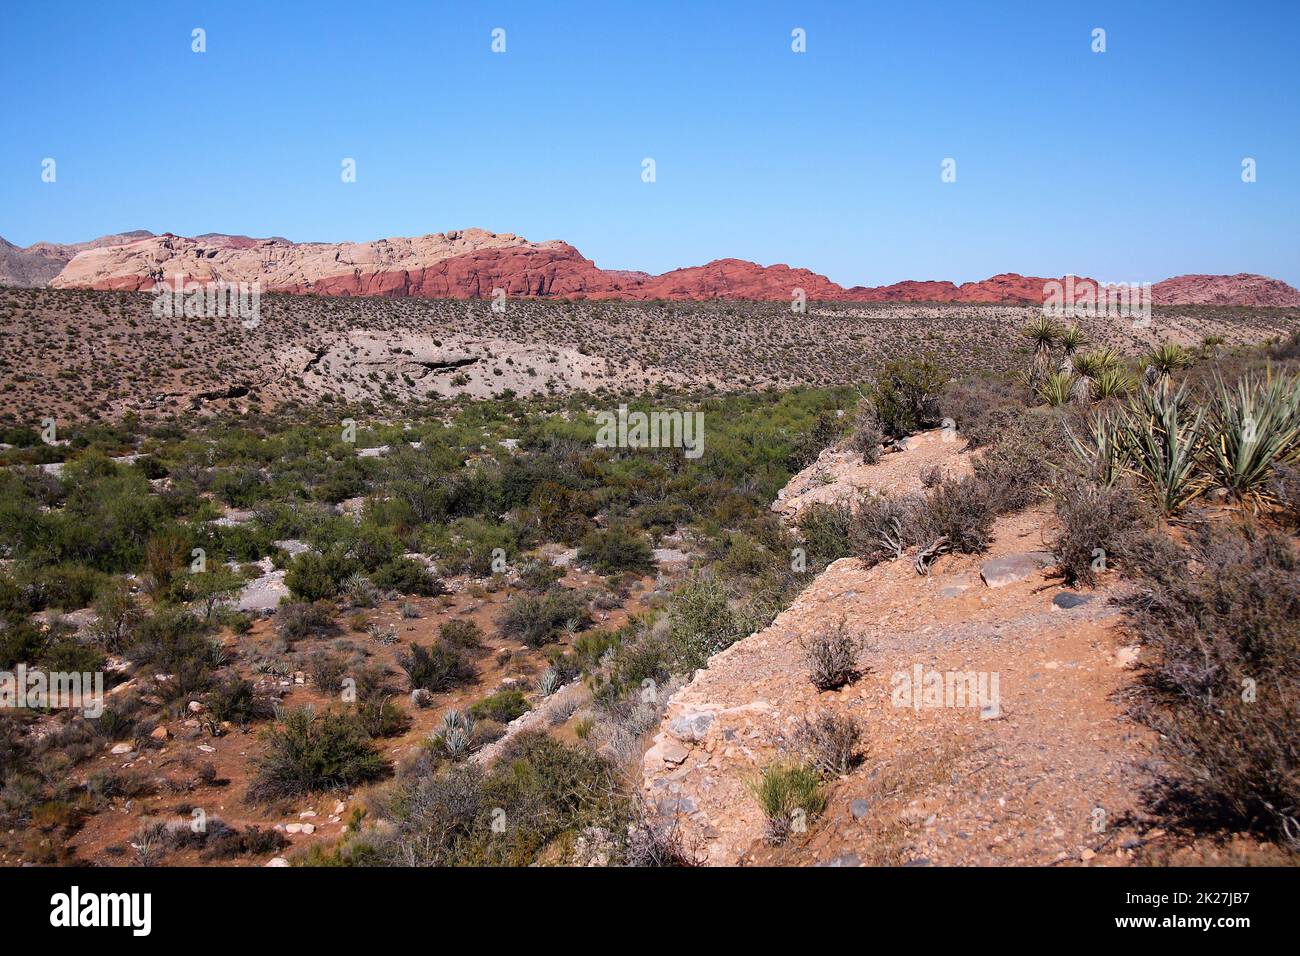 Valle de las vegas fotografías e imágenes de alta resolución - Alamy